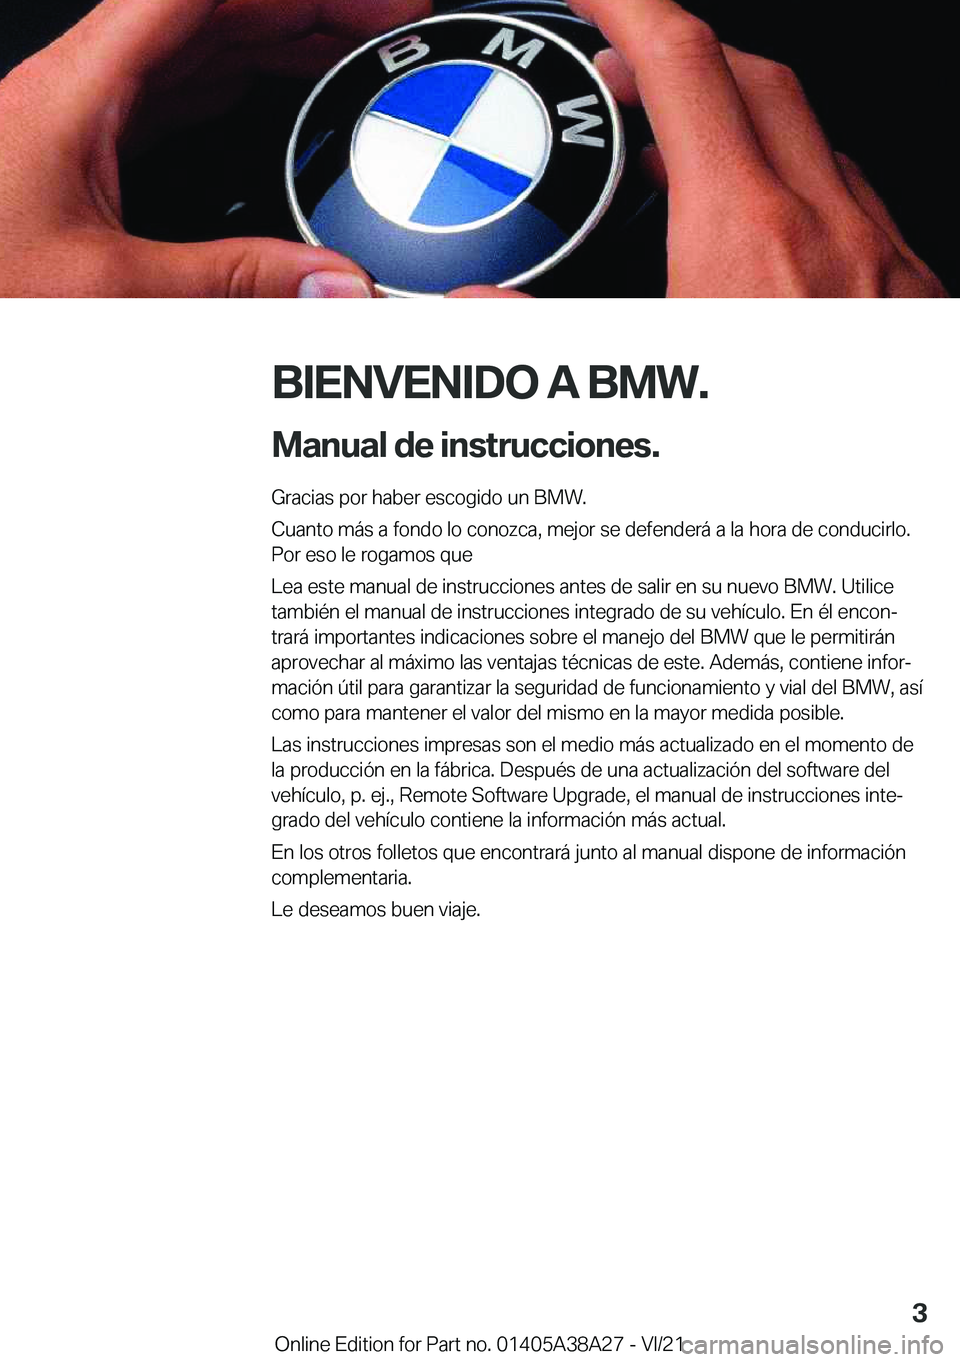 BMW 4 SERIES GRAN COUPE 2022  Manuales de Empleo (in Spanish) �B�I�E�N�V�E�N�I�D�O��A��B�M�W�.
�M�a�n�u�a�l��d�e��i�n�s�t�r�u�c�c�i�o�n�e�s�. �G�r�a�c�i�a�s��p�o�r��h�a�b�e�r��e�s�c�o�g�i�d�o��u�n��B�M�W�.
�C�u�a�n�t�o��m�